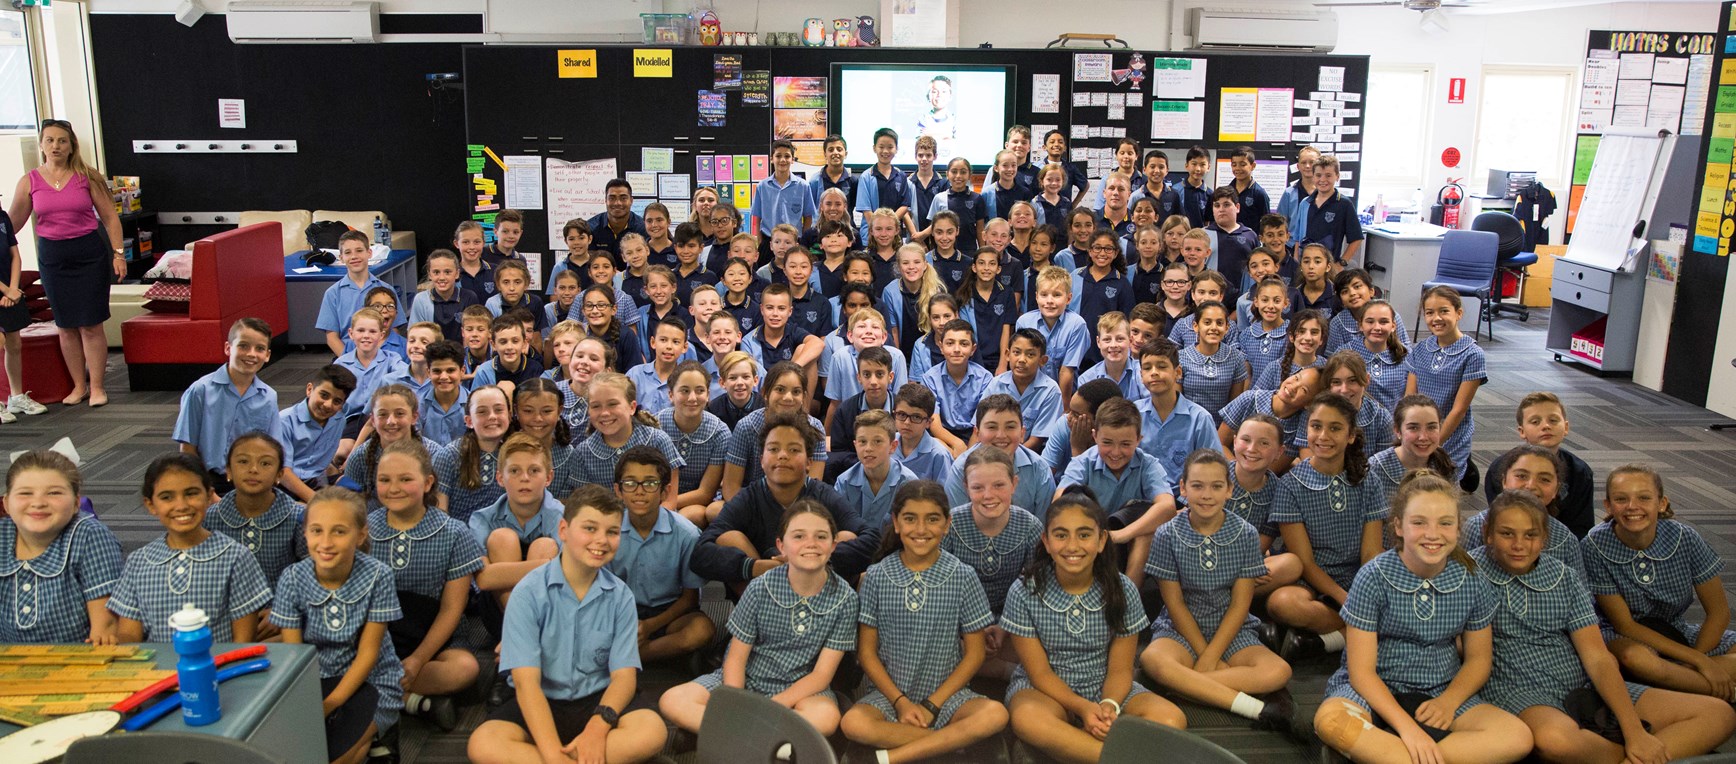 Eels blitz schools in Parramatta region